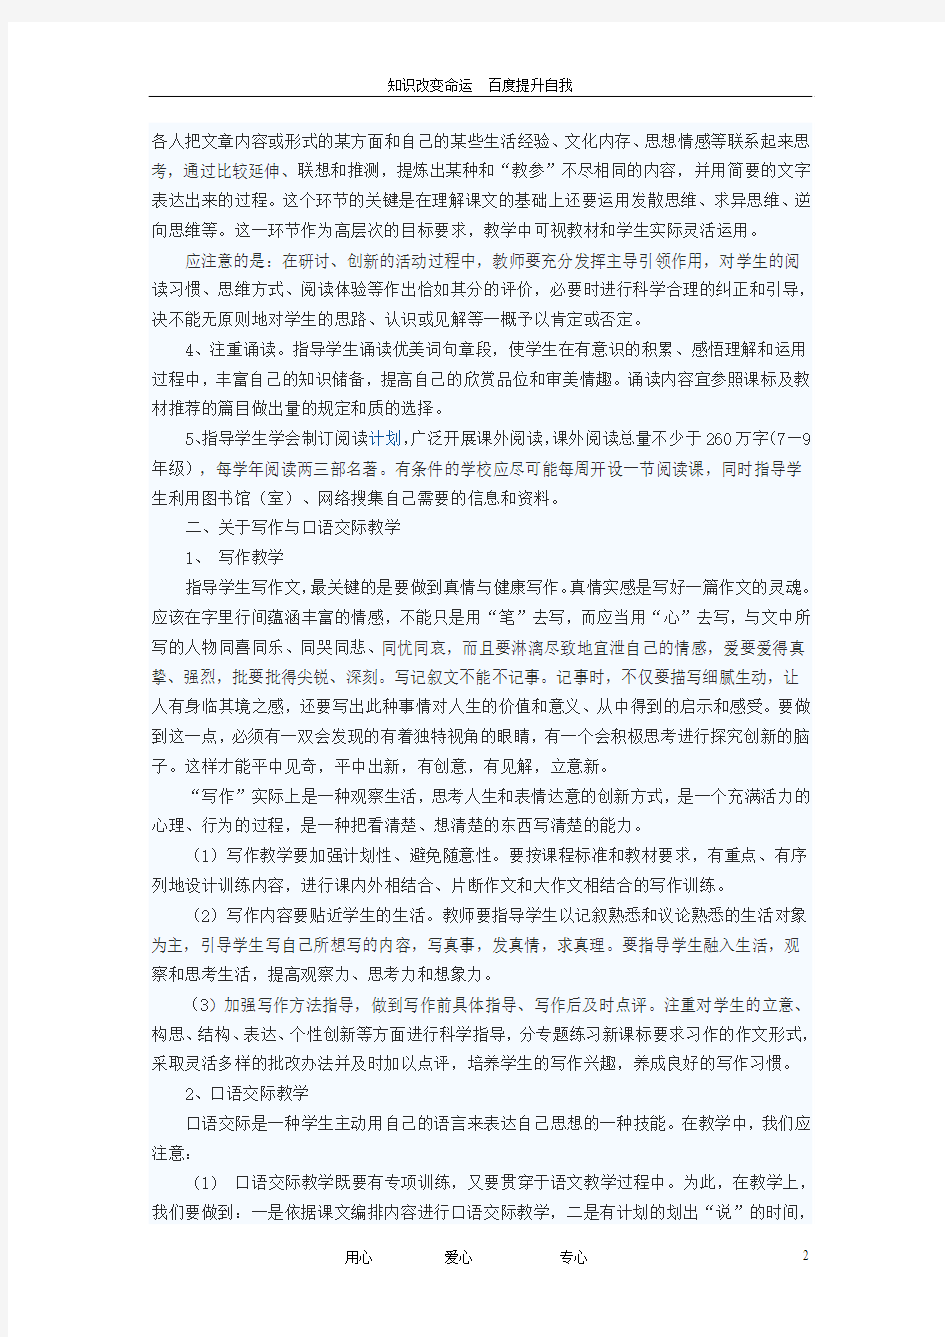 (no.1)初中语文教学论文 语文教学中的几点建议